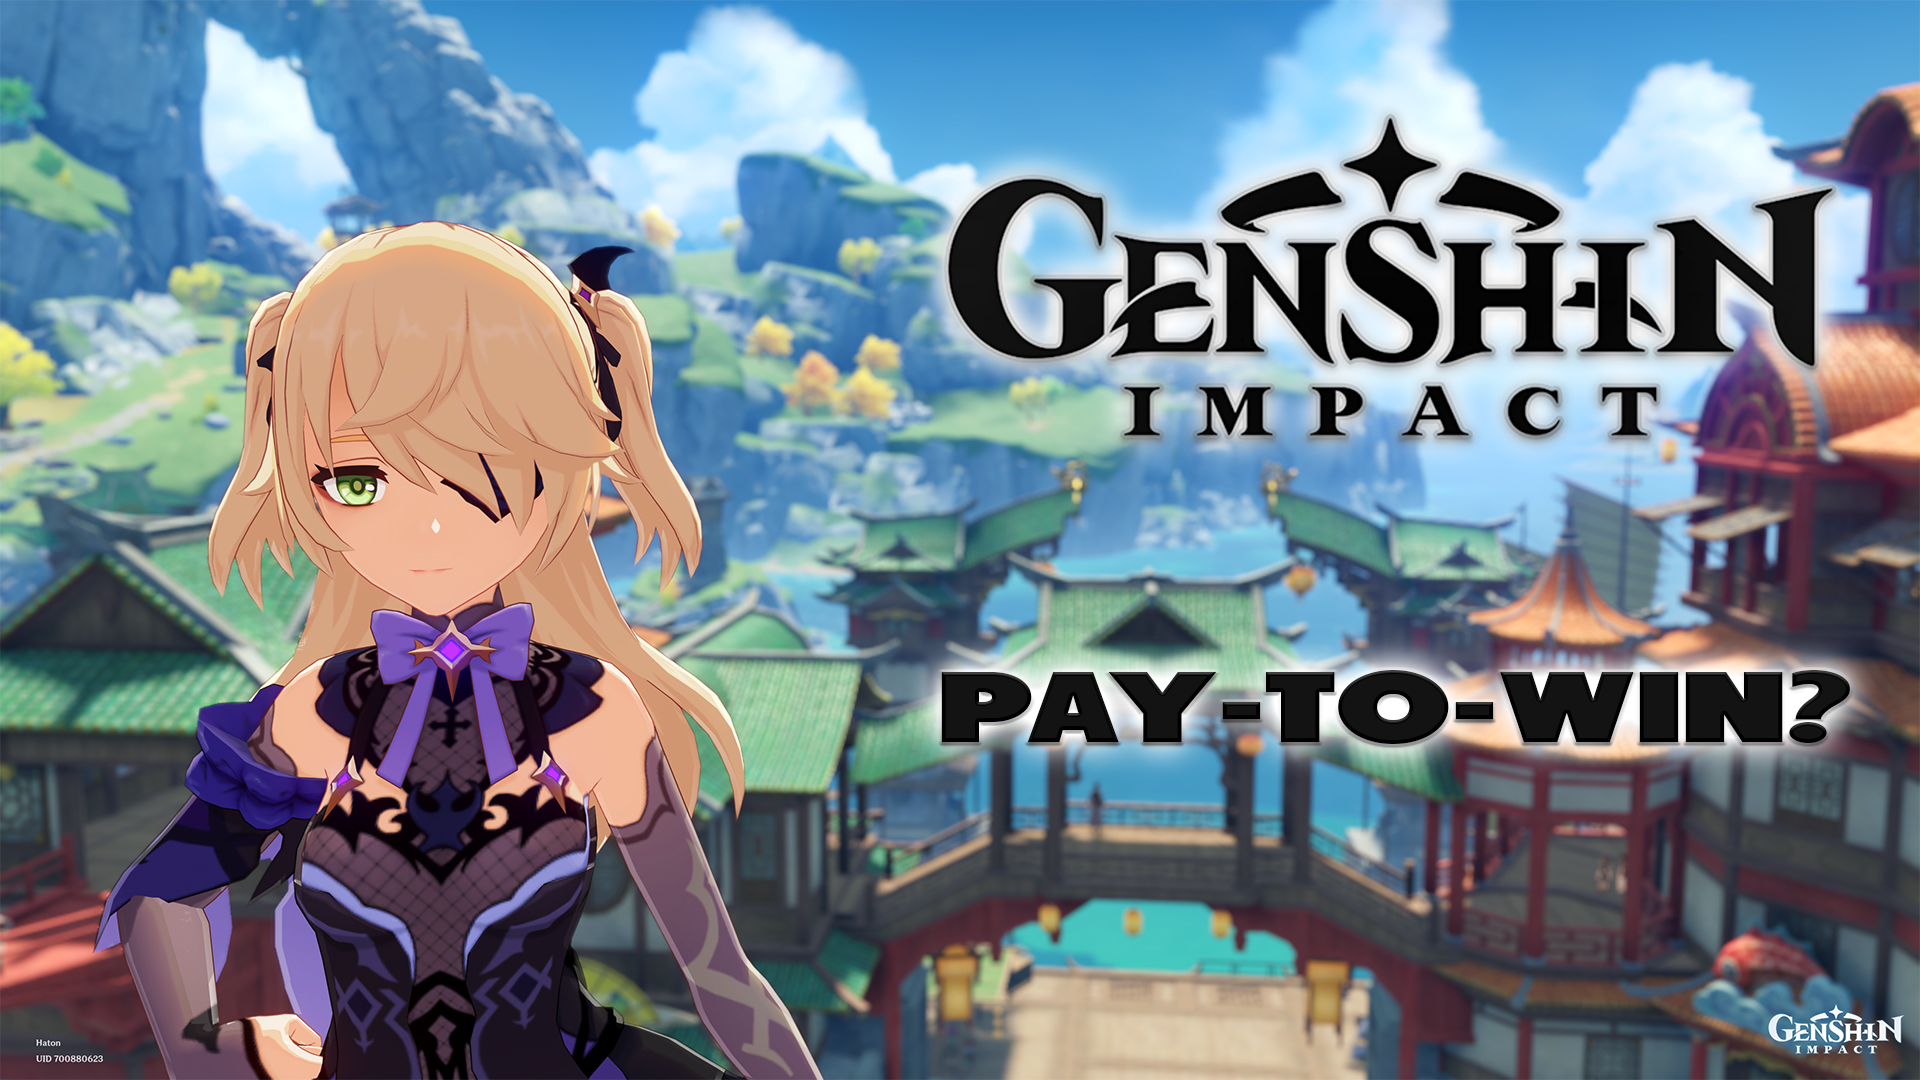 Ist Genshin Impact Pay-to-Win? - Haton.net